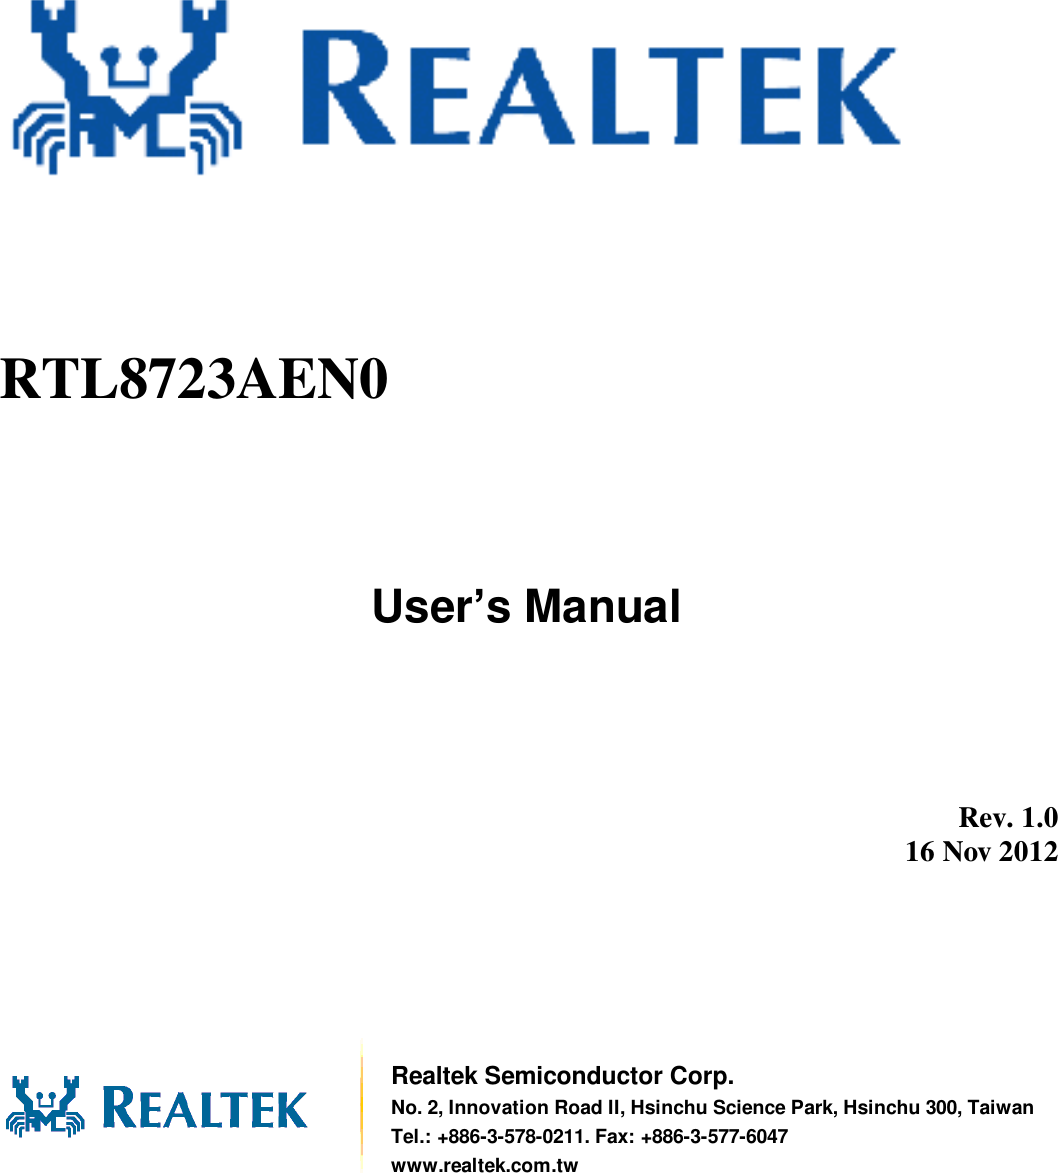                User’s Manual          Rev. 1.0 16 Nov 2012        Realtek Semiconductor Corp. No. 2, Innovation Road II, Hsinchu Science Park, Hsinchu 300, Taiwan Tel.: +886-3-578-0211. Fax: +886-3-577-6047 www.realtek.com.tw RTL8723AEN0  